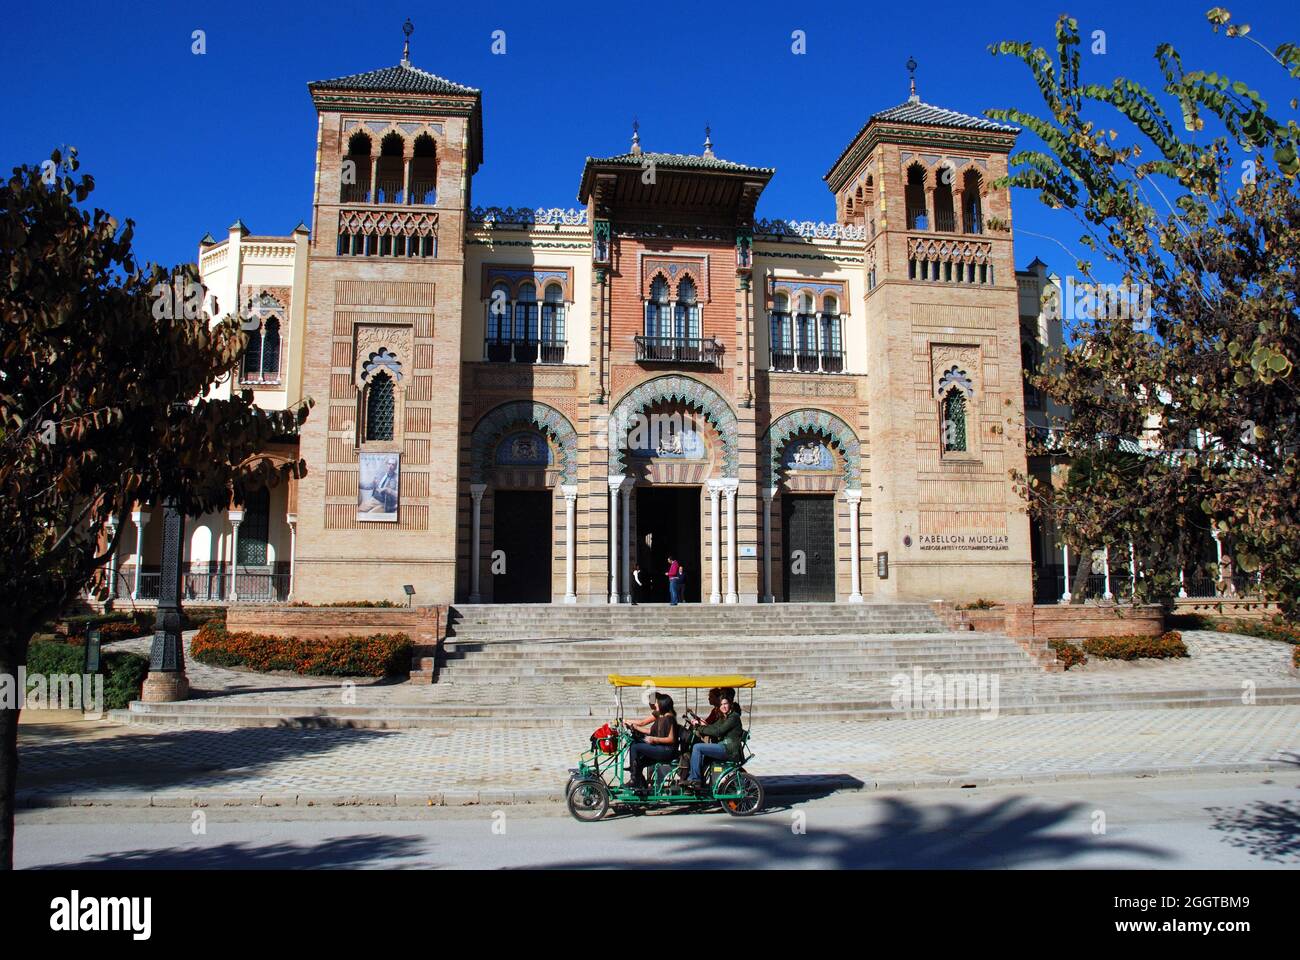 Museum of popular arts (Museo de Artes y Costumbres Populares), Seville, Spain. Stock Photo